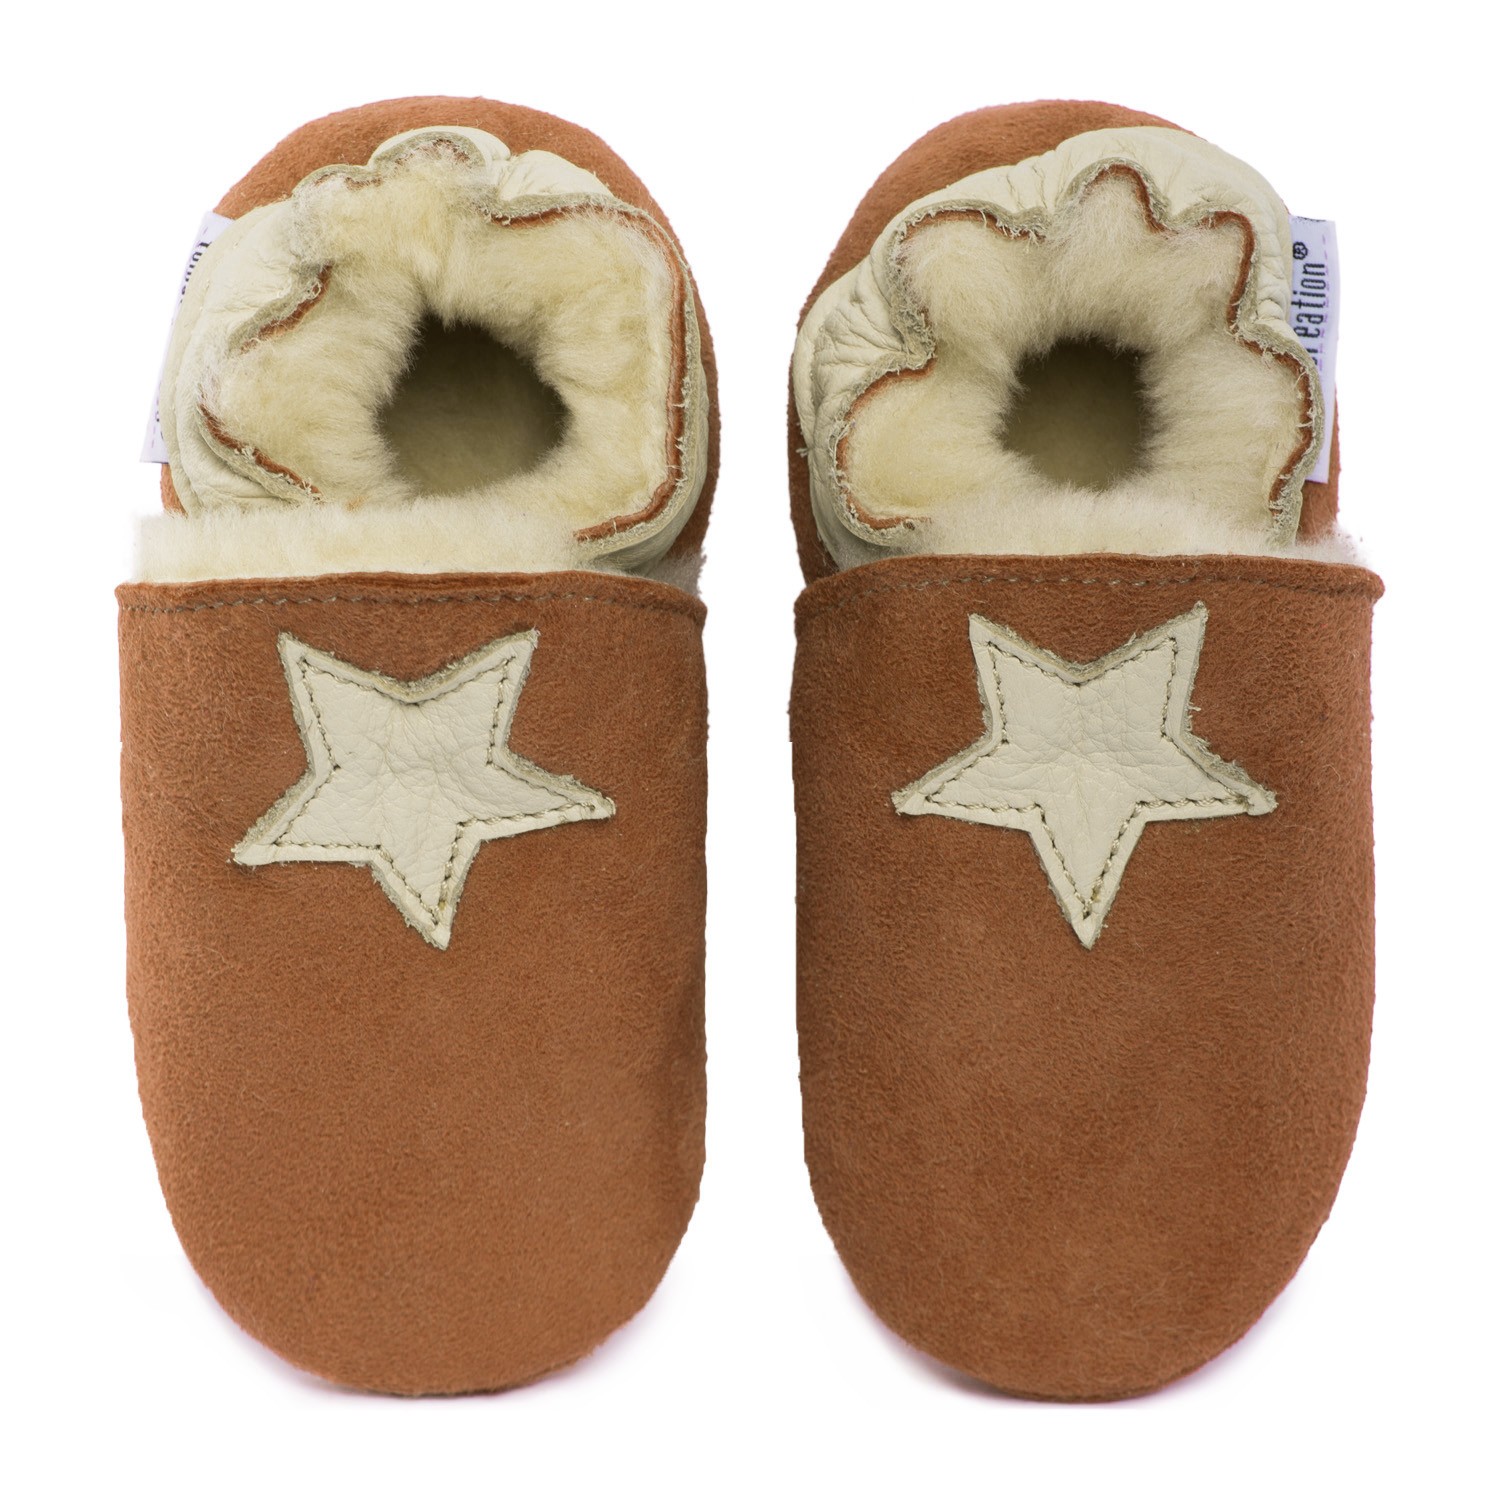 Ond Rejsende Emuler Dark brown woolen slippers, 100% sheep, beige star